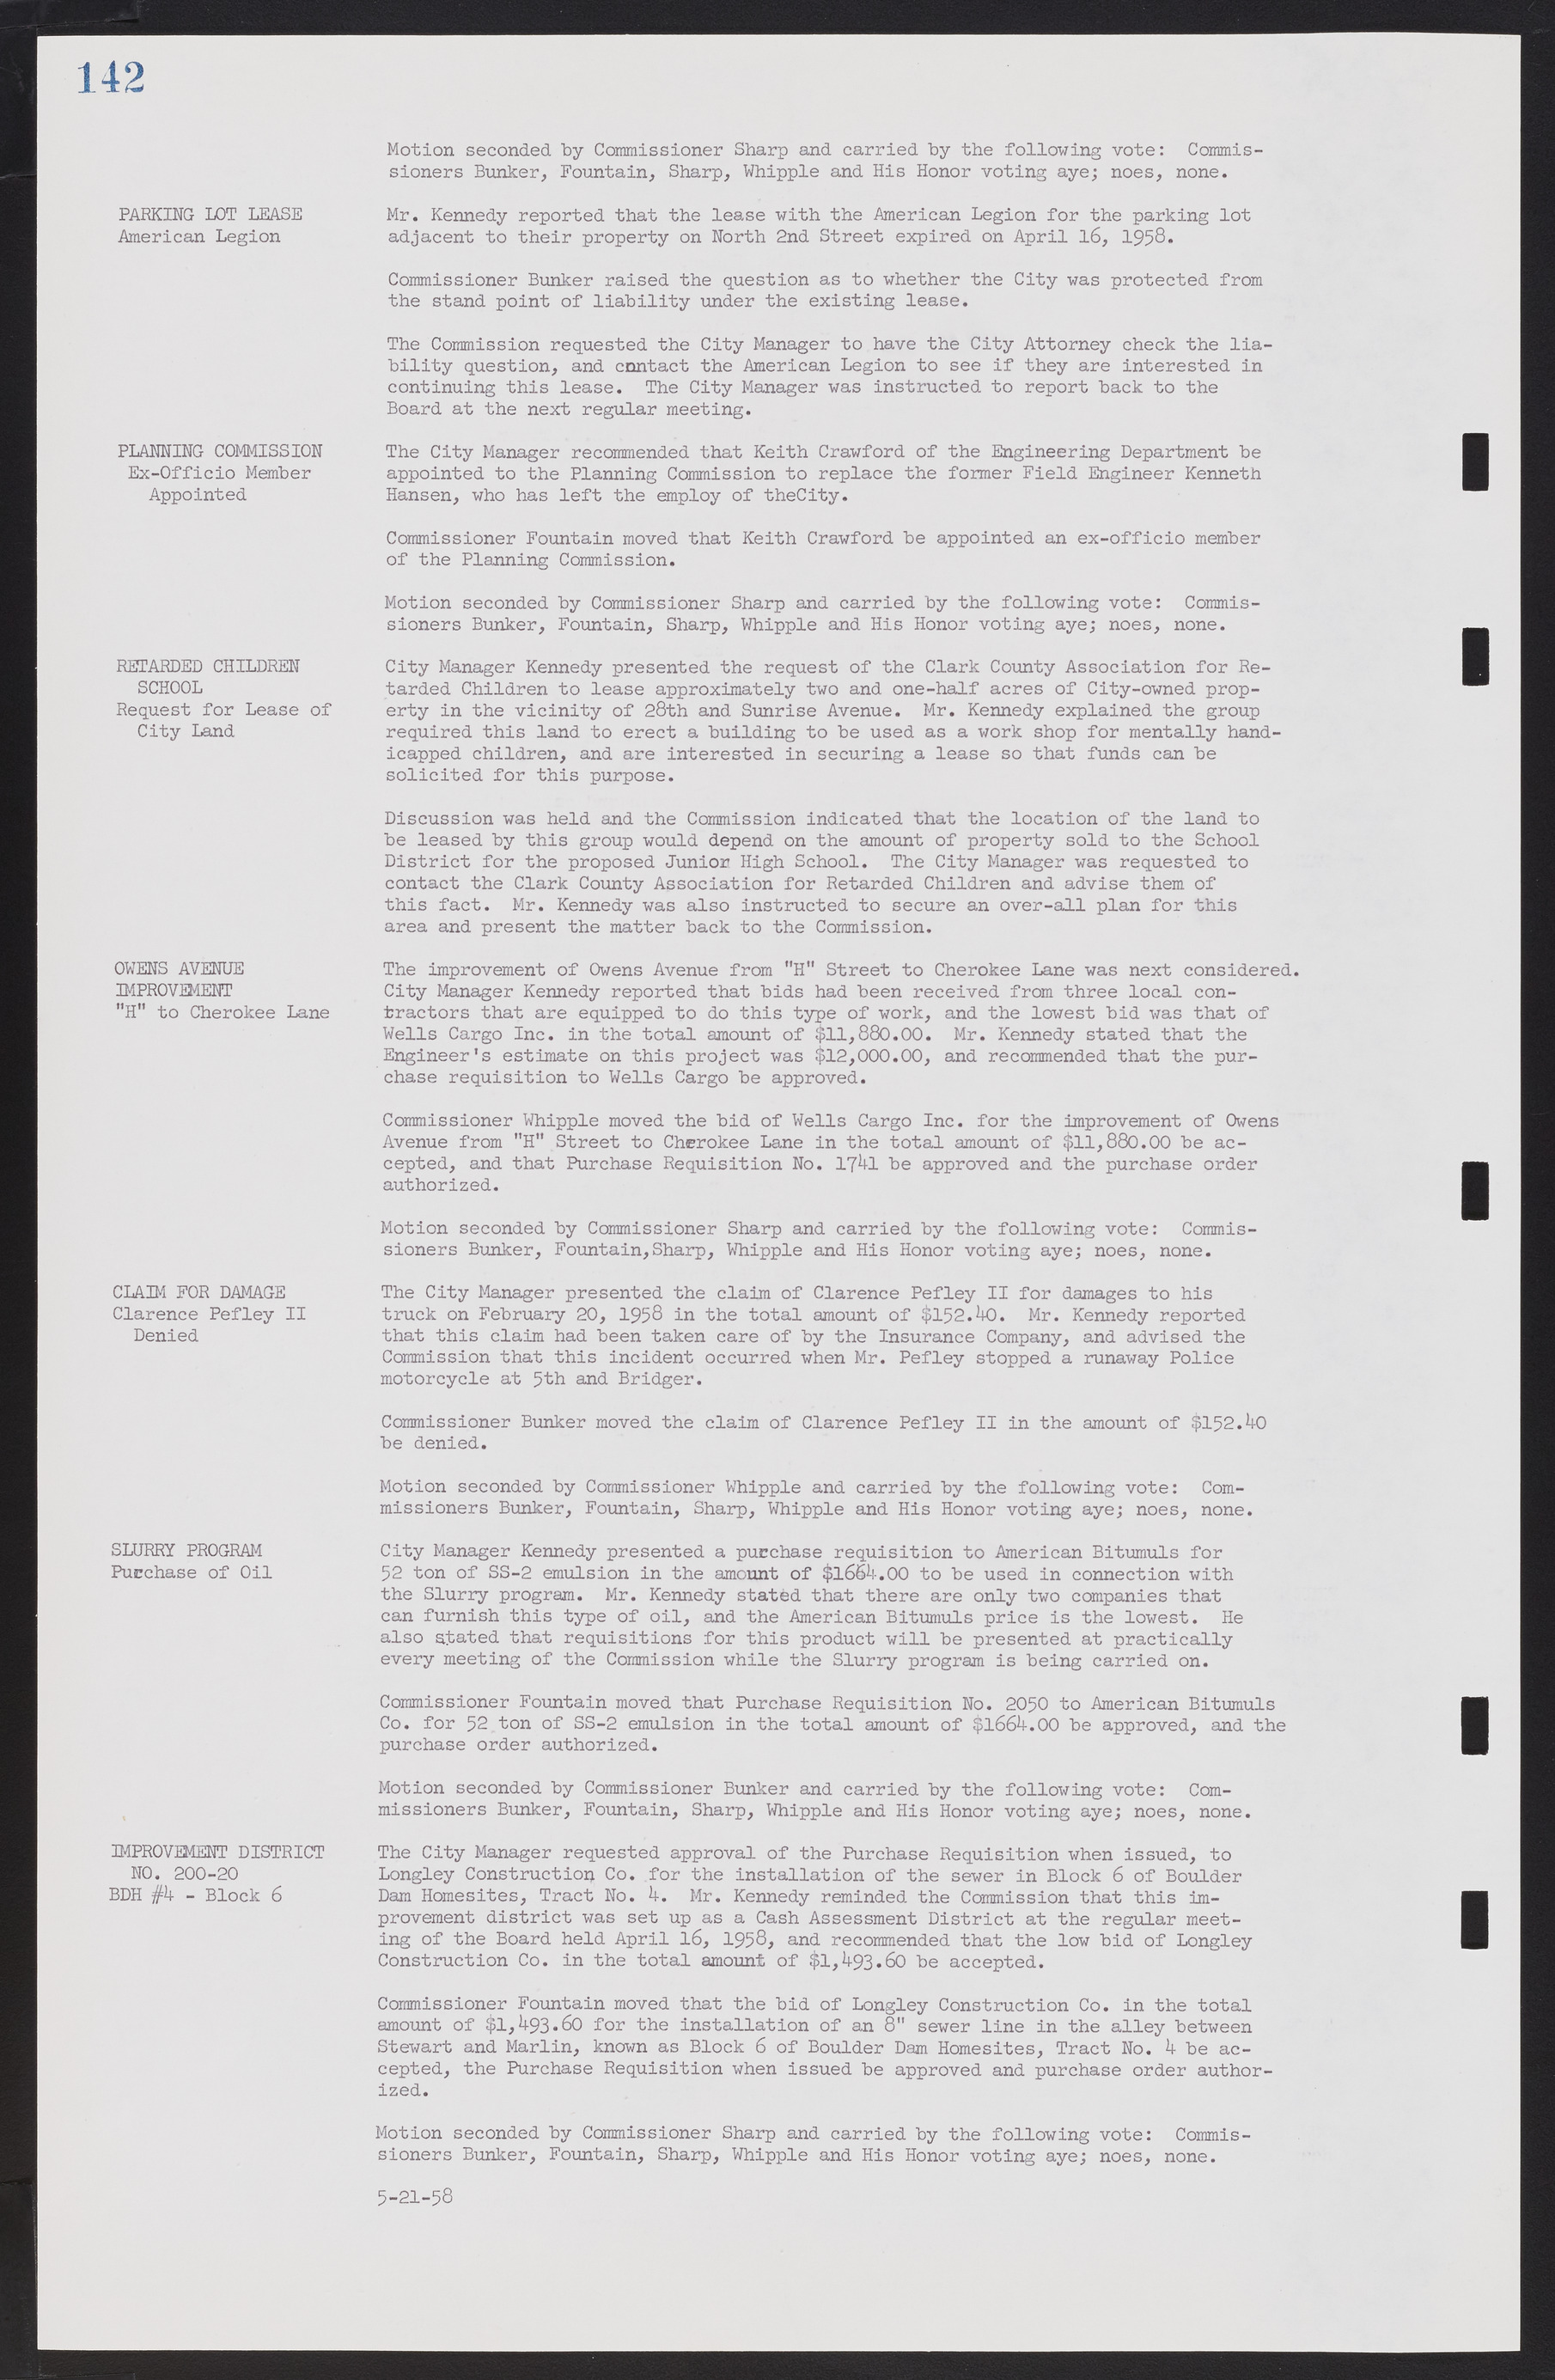 Las Vegas City Commission Minutes, November 20, 1957 to December 2, 1959, lvc000011-146